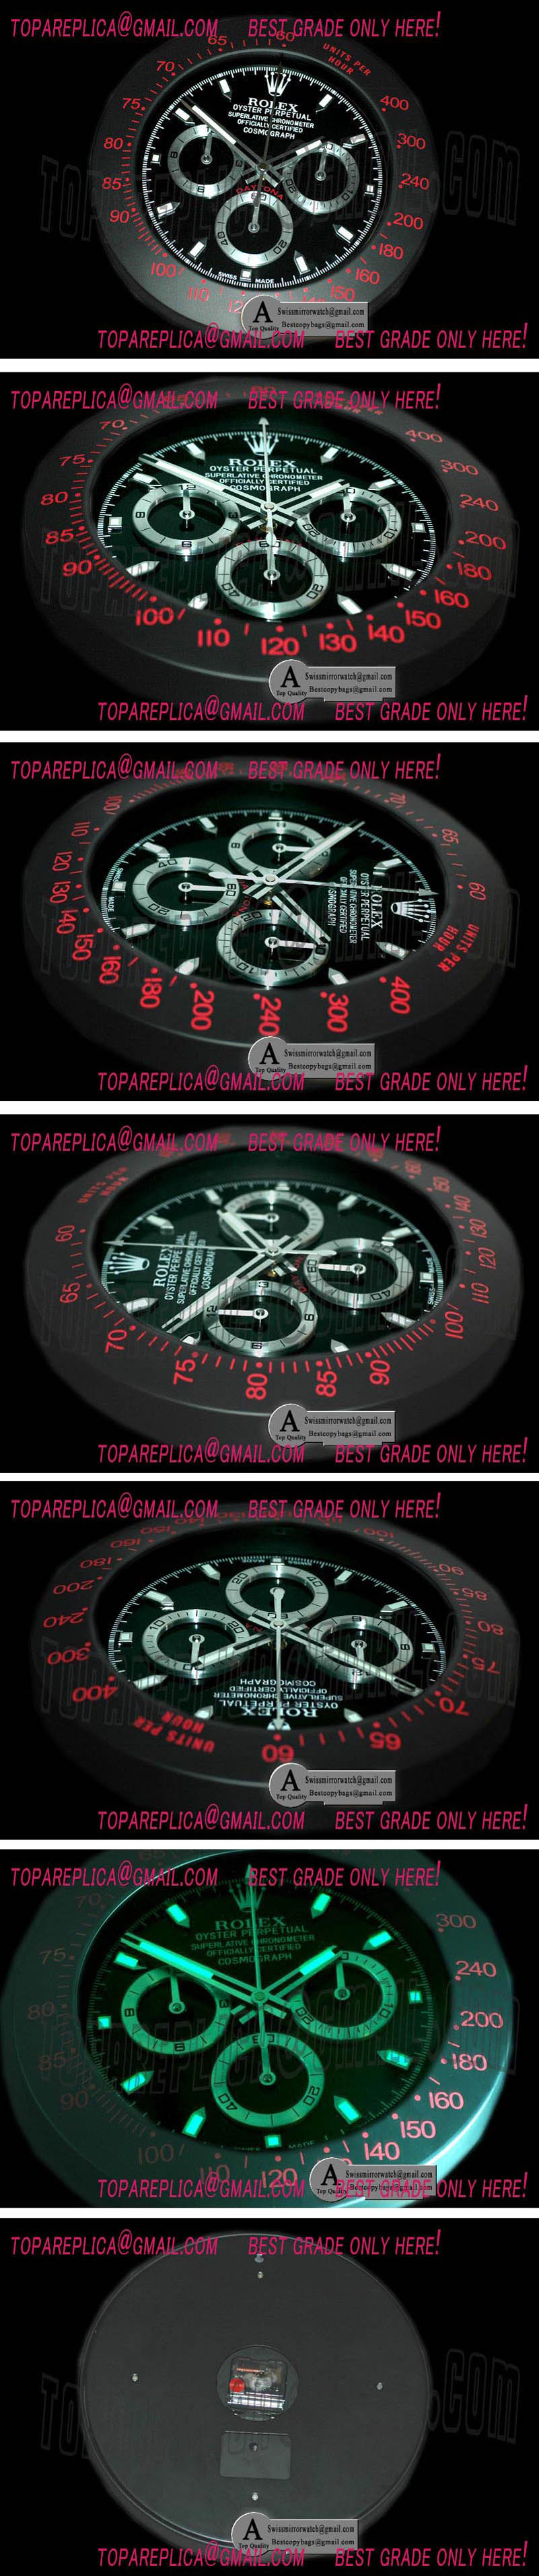 Rolex Dealer Clock Prohunter MkII Daytona Style Swiss Quartz Replica Watches